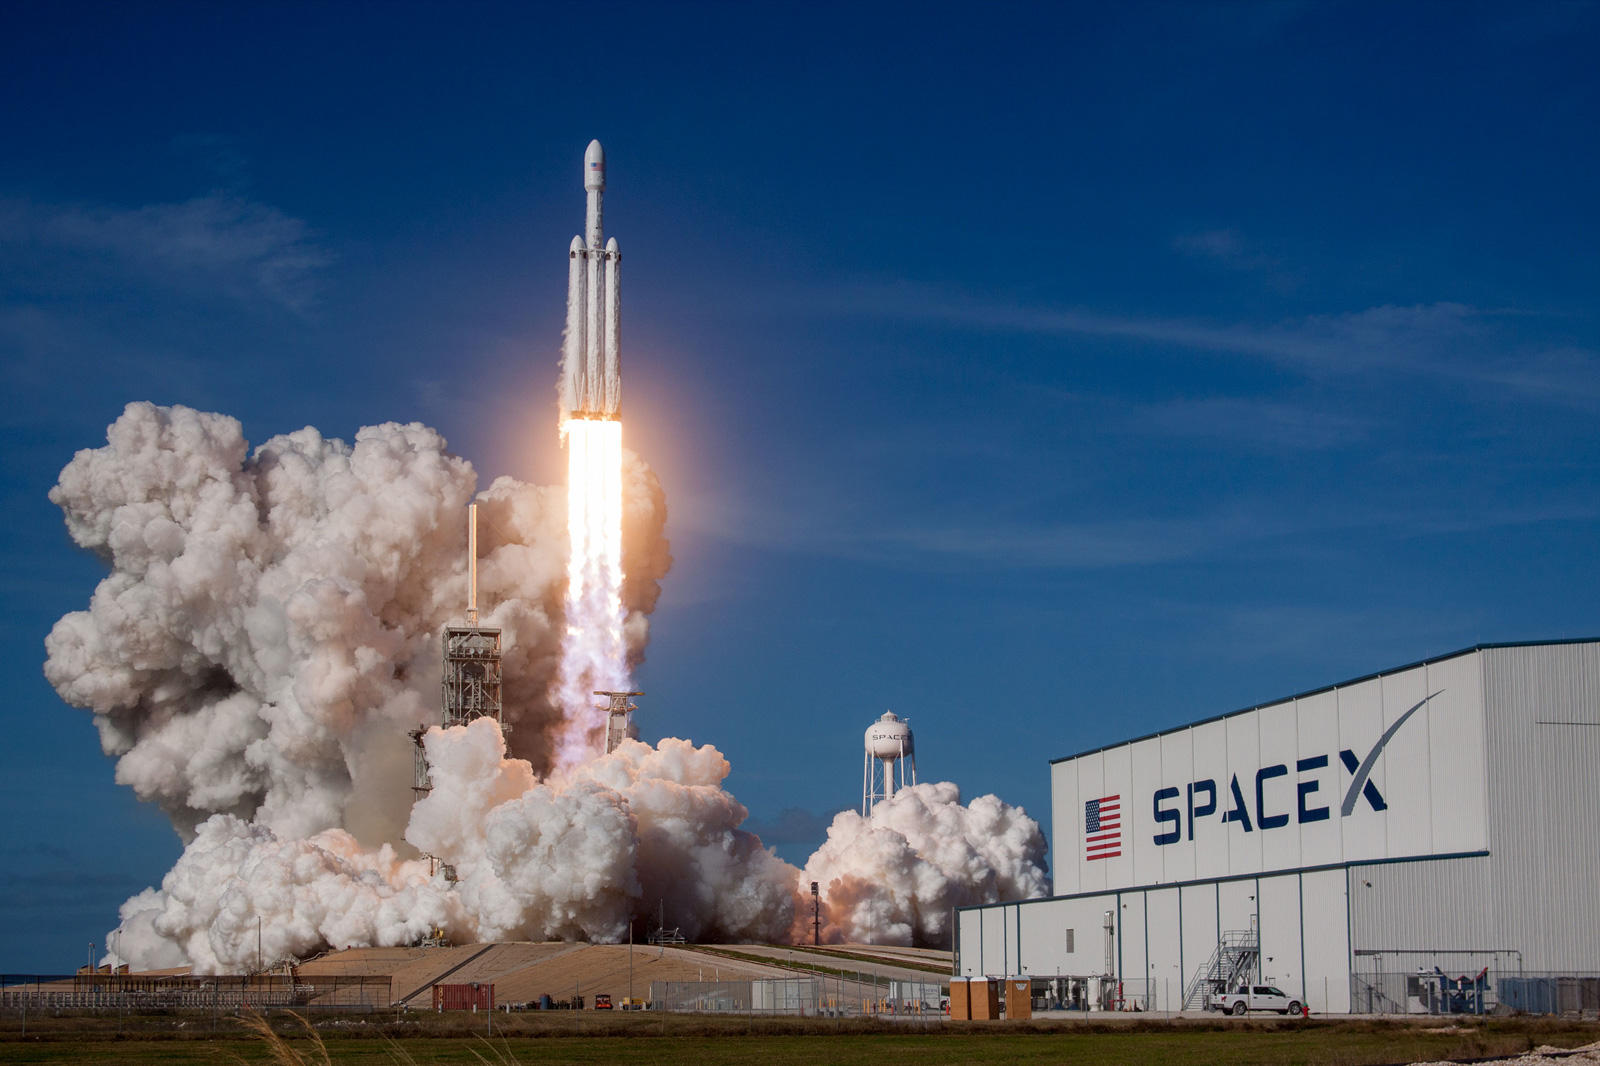 Elon Musk's SpaceX Preppi pivotal engine test